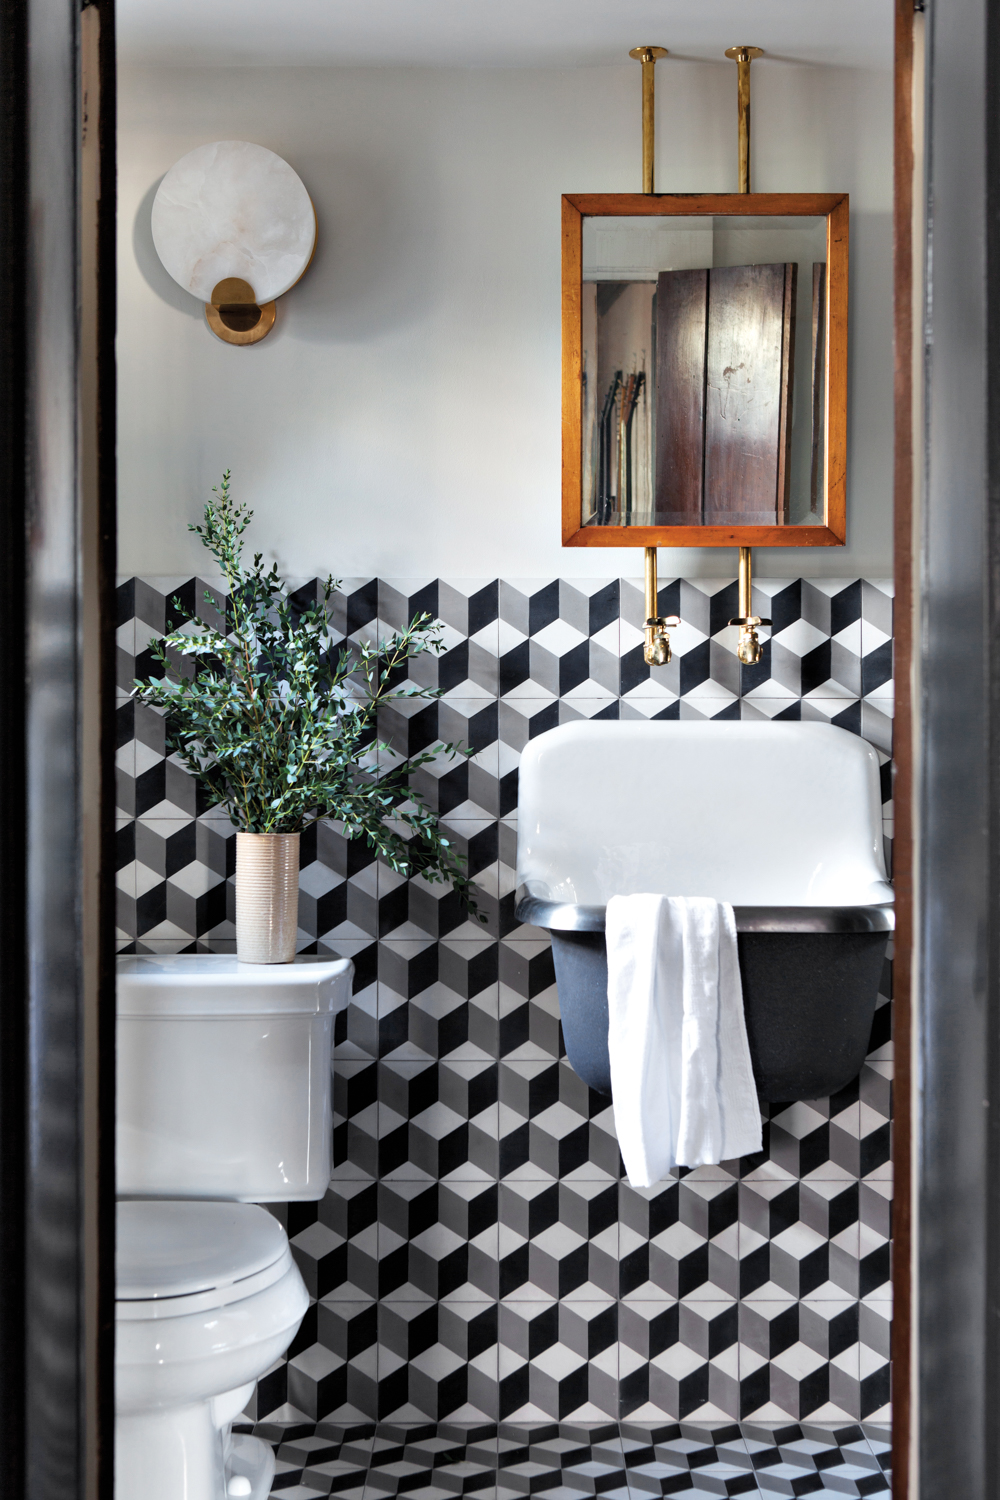 Powder room with checkered tile backsplash by Benjamin Vandiver